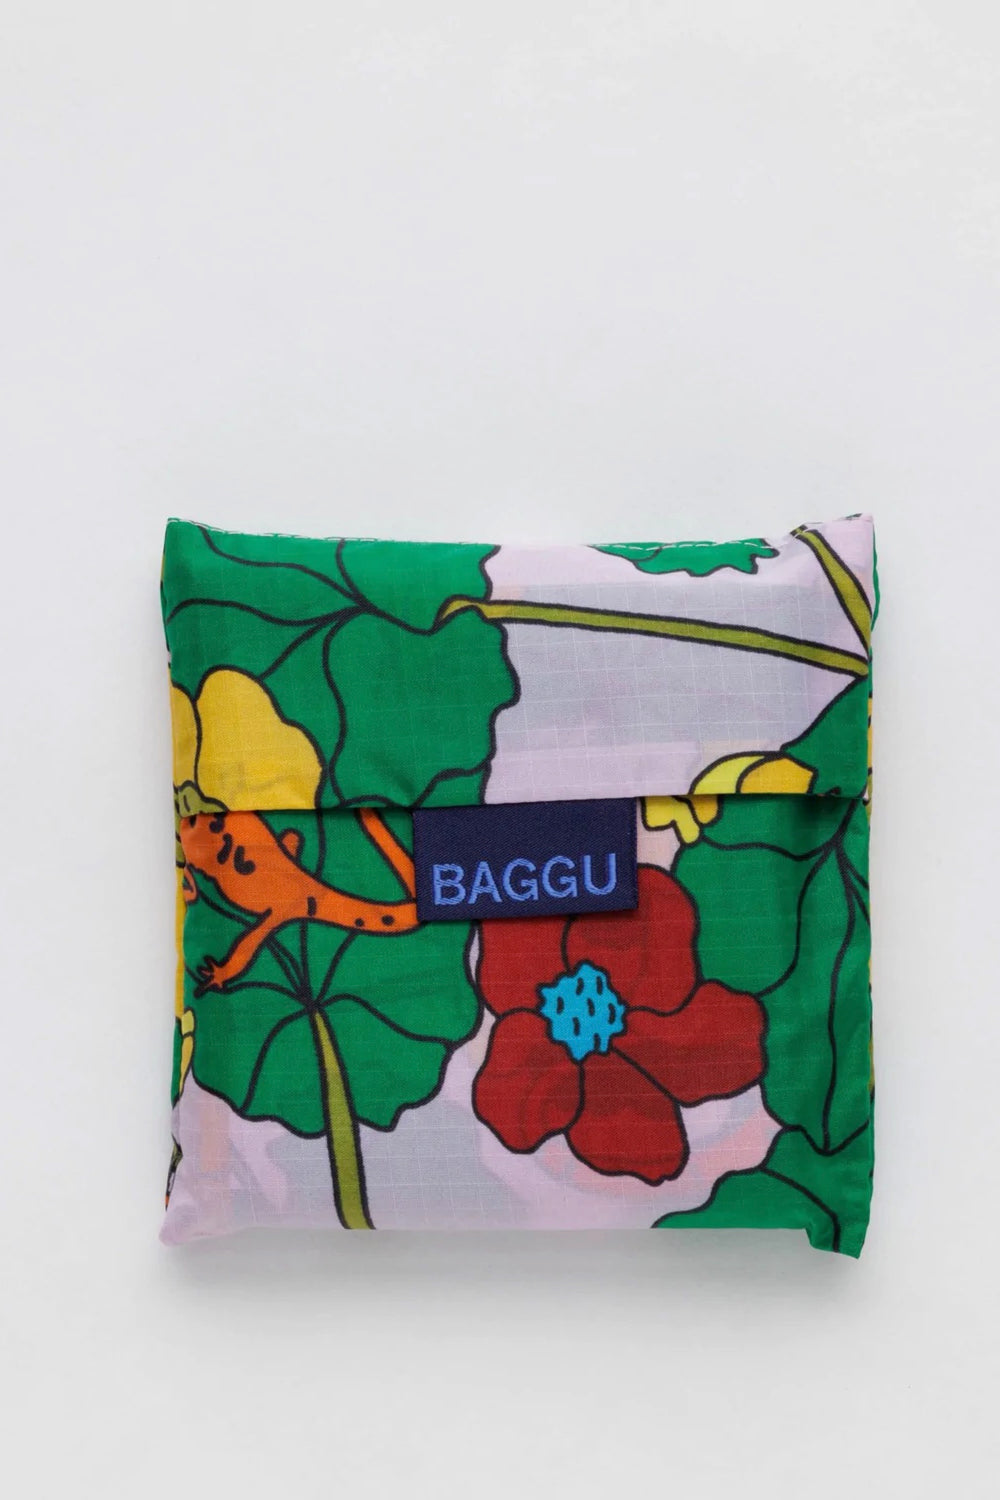 Marigold Newt Baggu